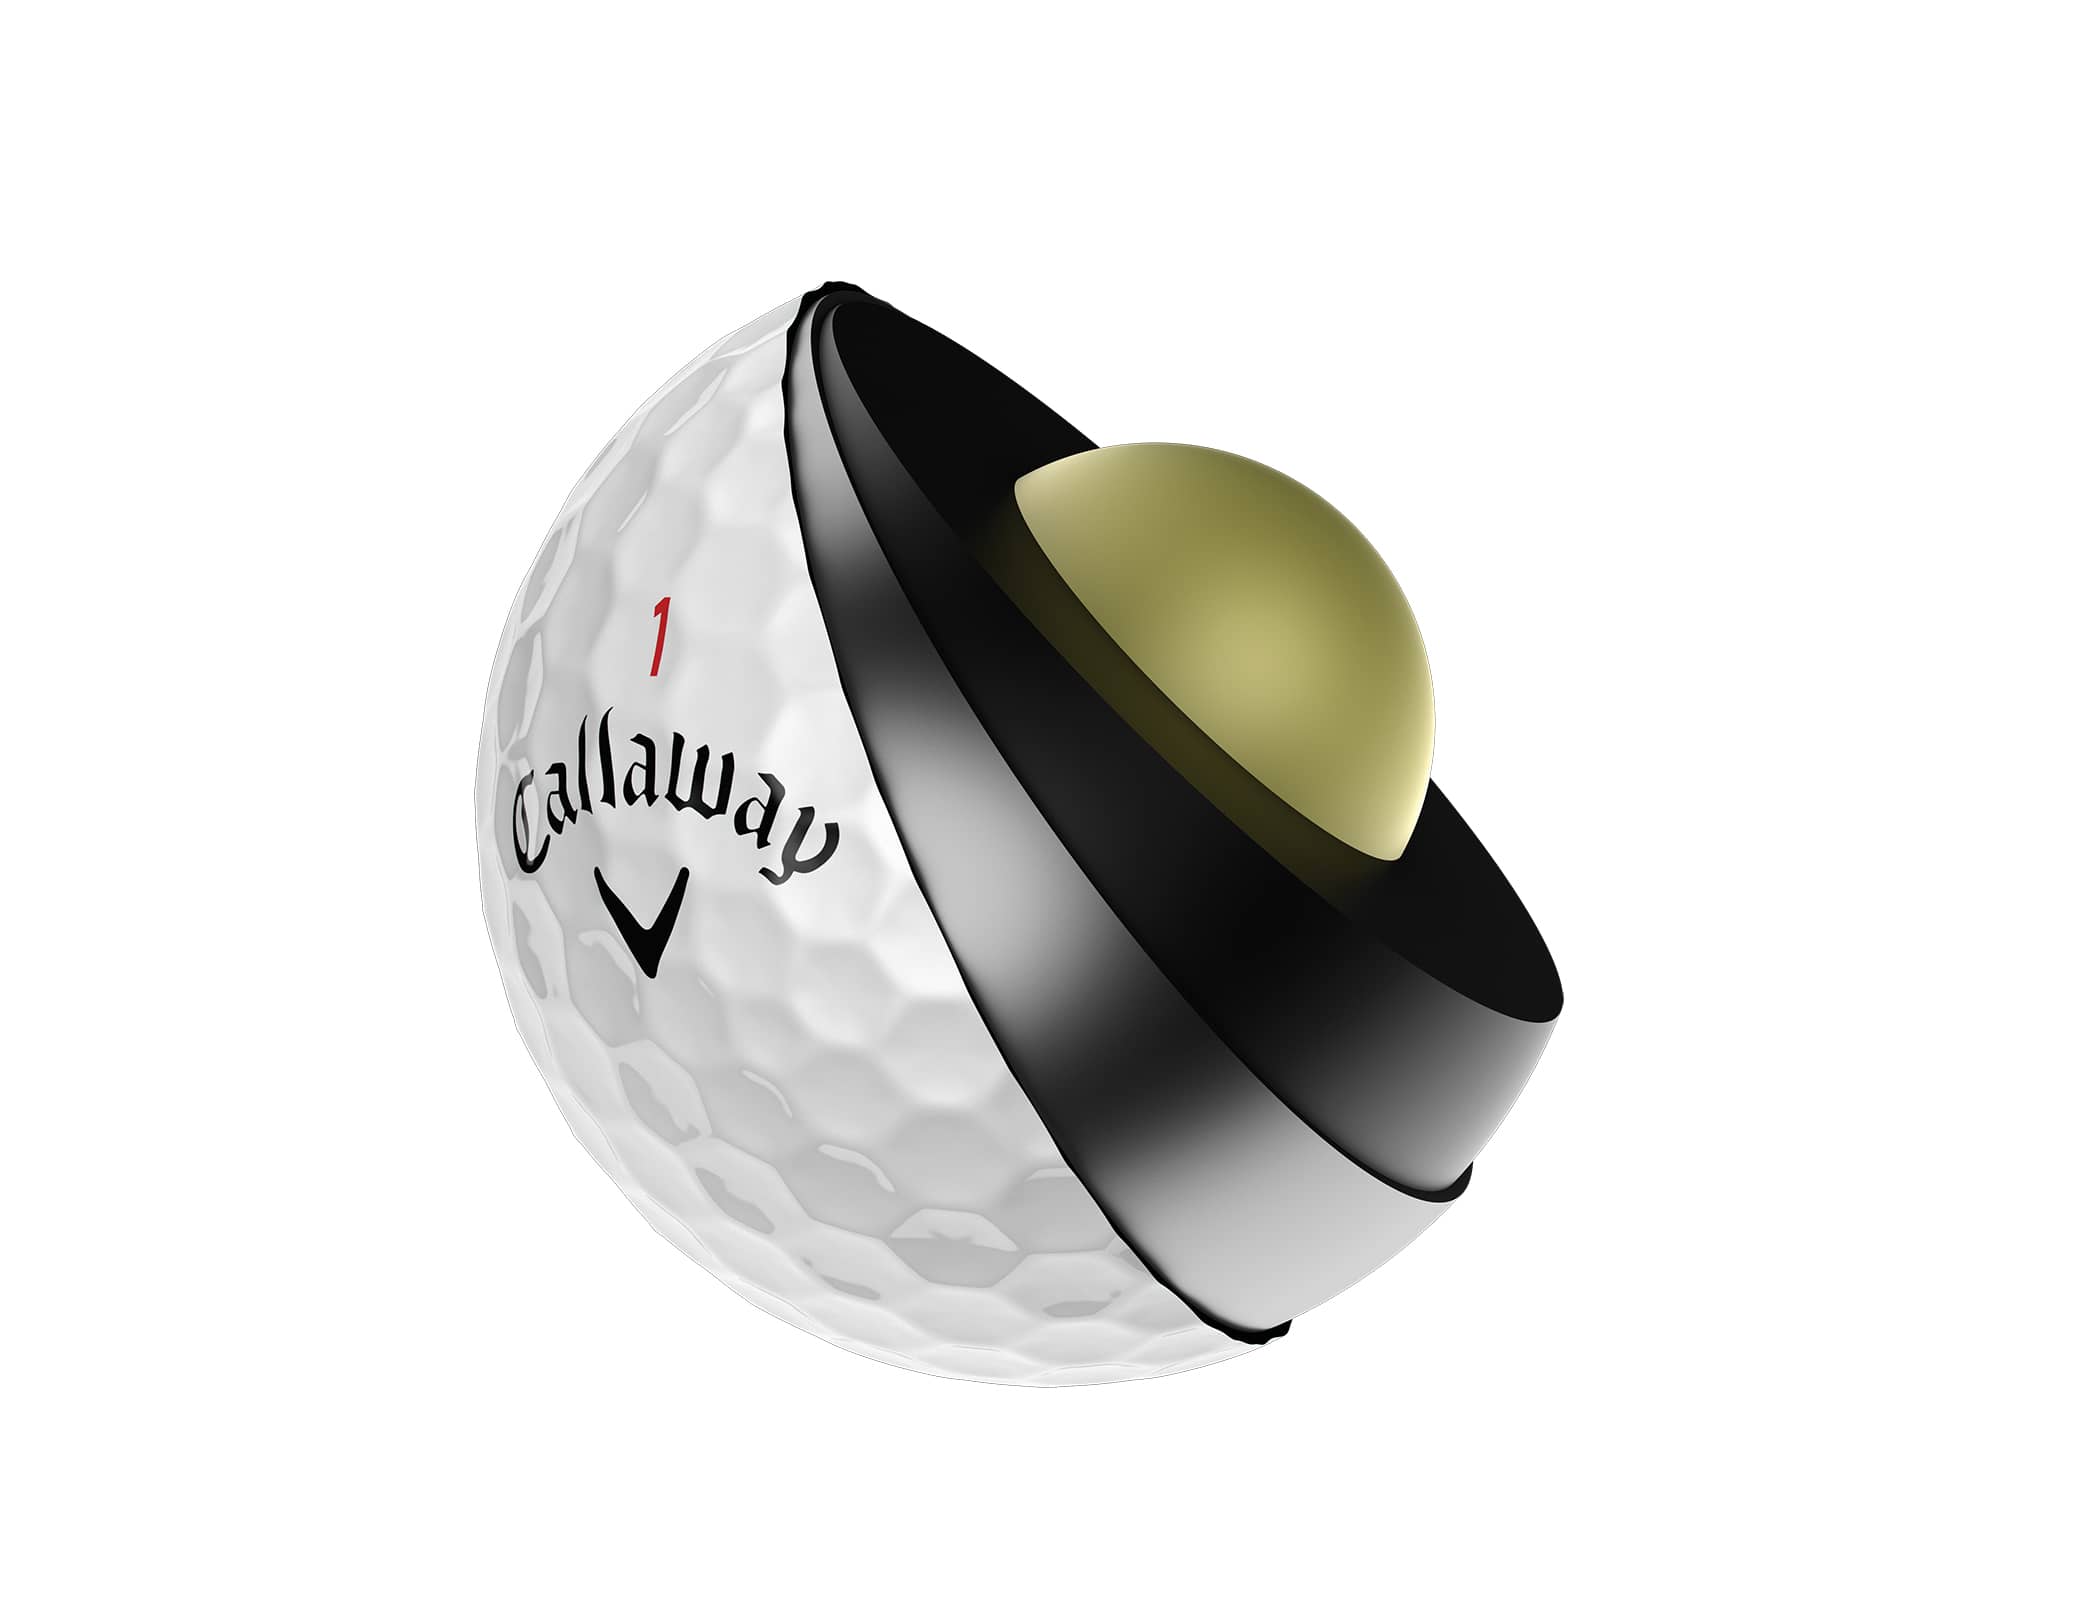 Callaway Chrome Soft X Golfball